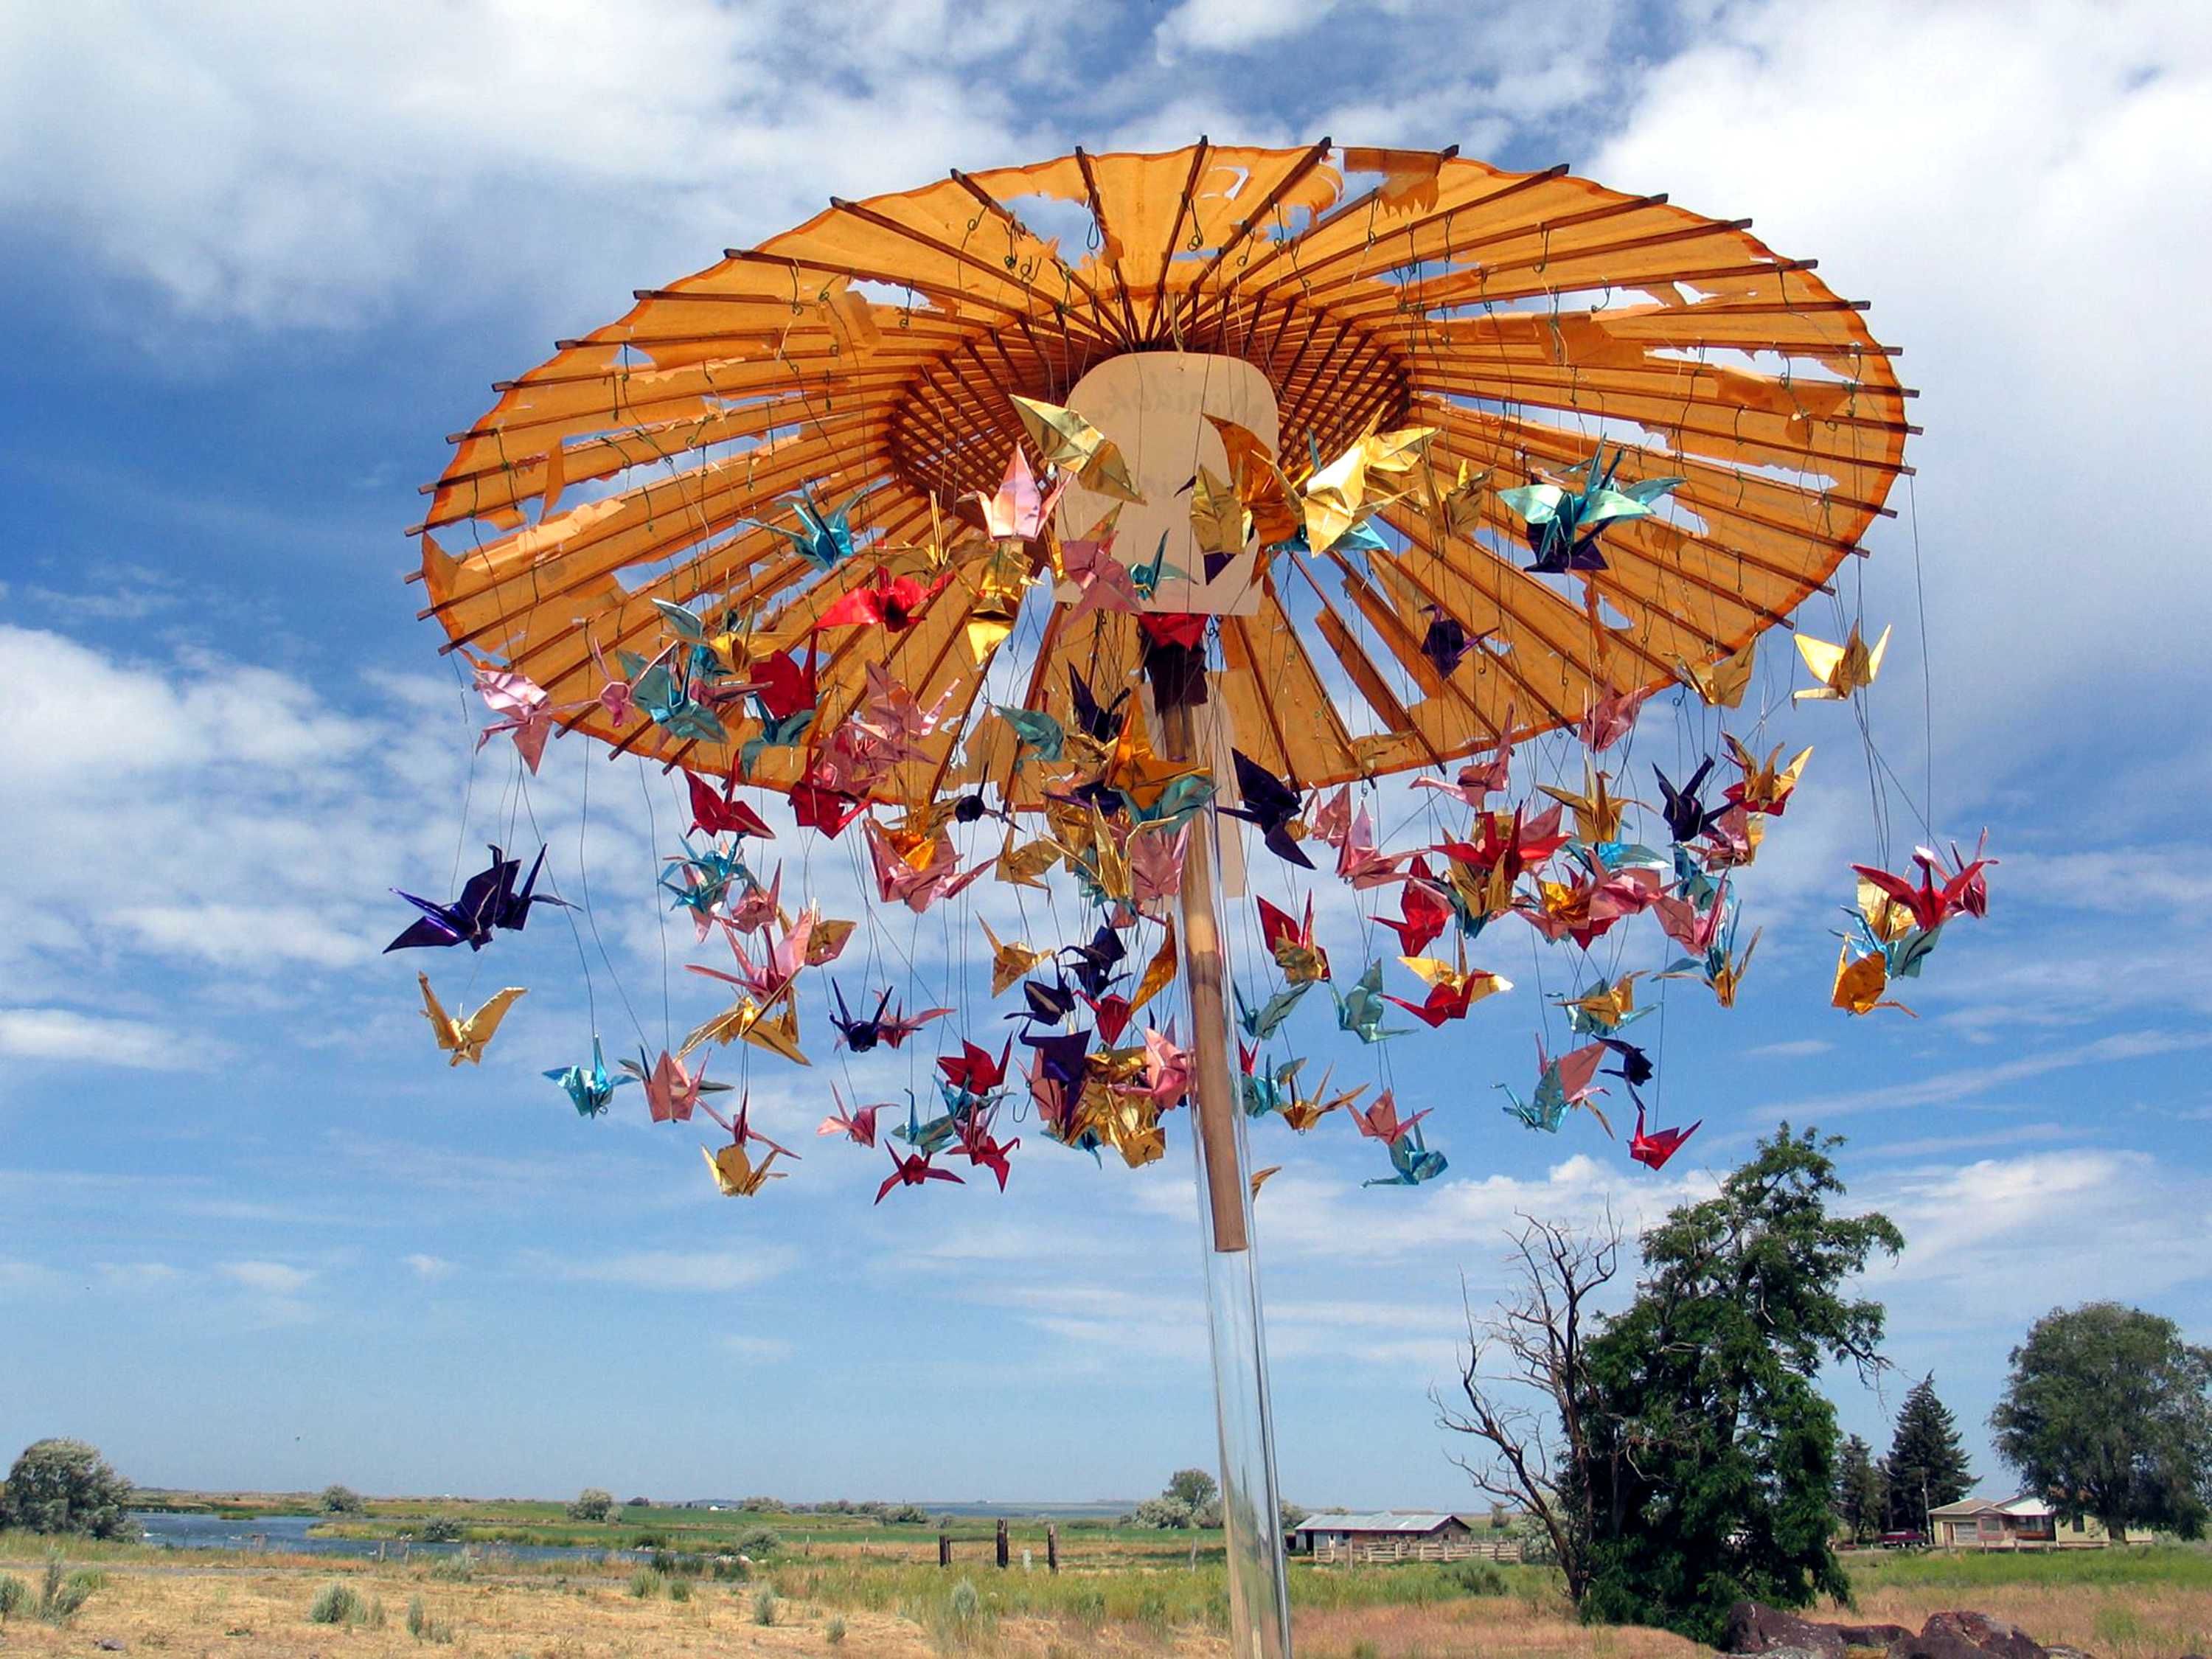 Origami cranes twirl on carousel